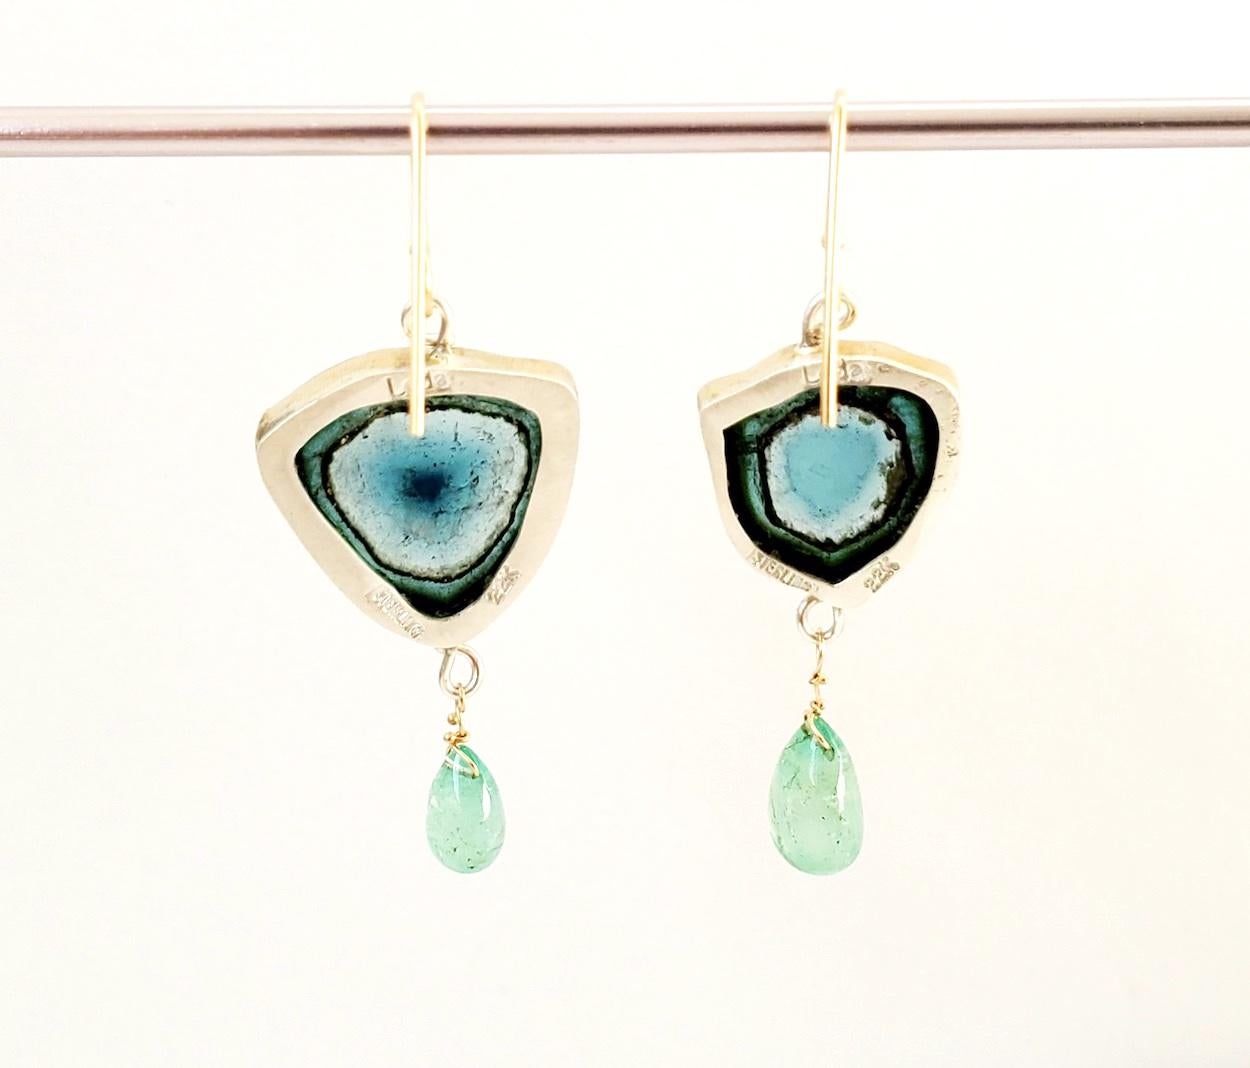 Artisan Leda Jewel Co Blue Tourmaline aka Indicolite Earrings with Emerald Drops For Sale